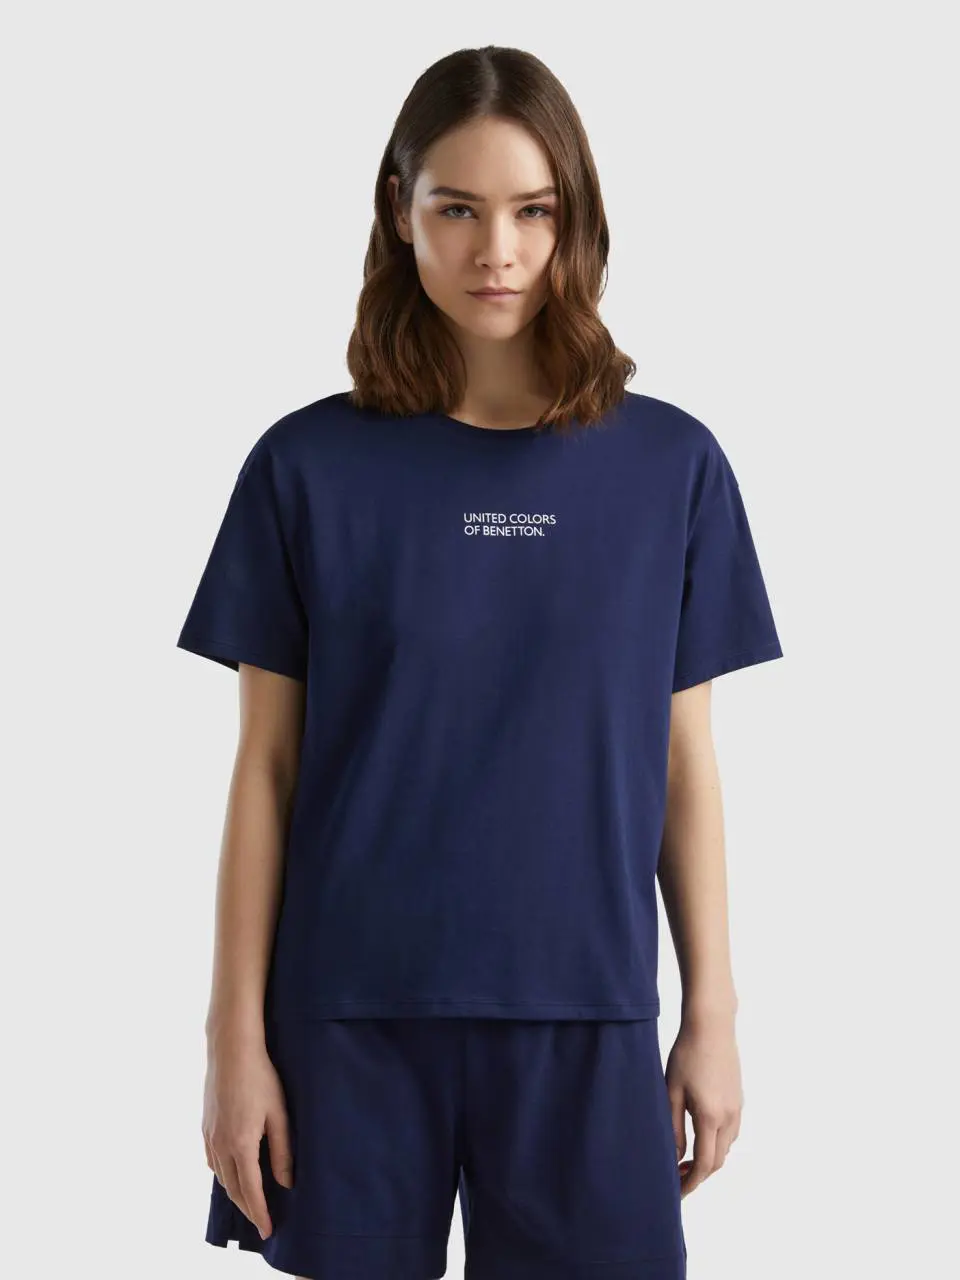 Benetton short sleeve t-shirt with logo. 1